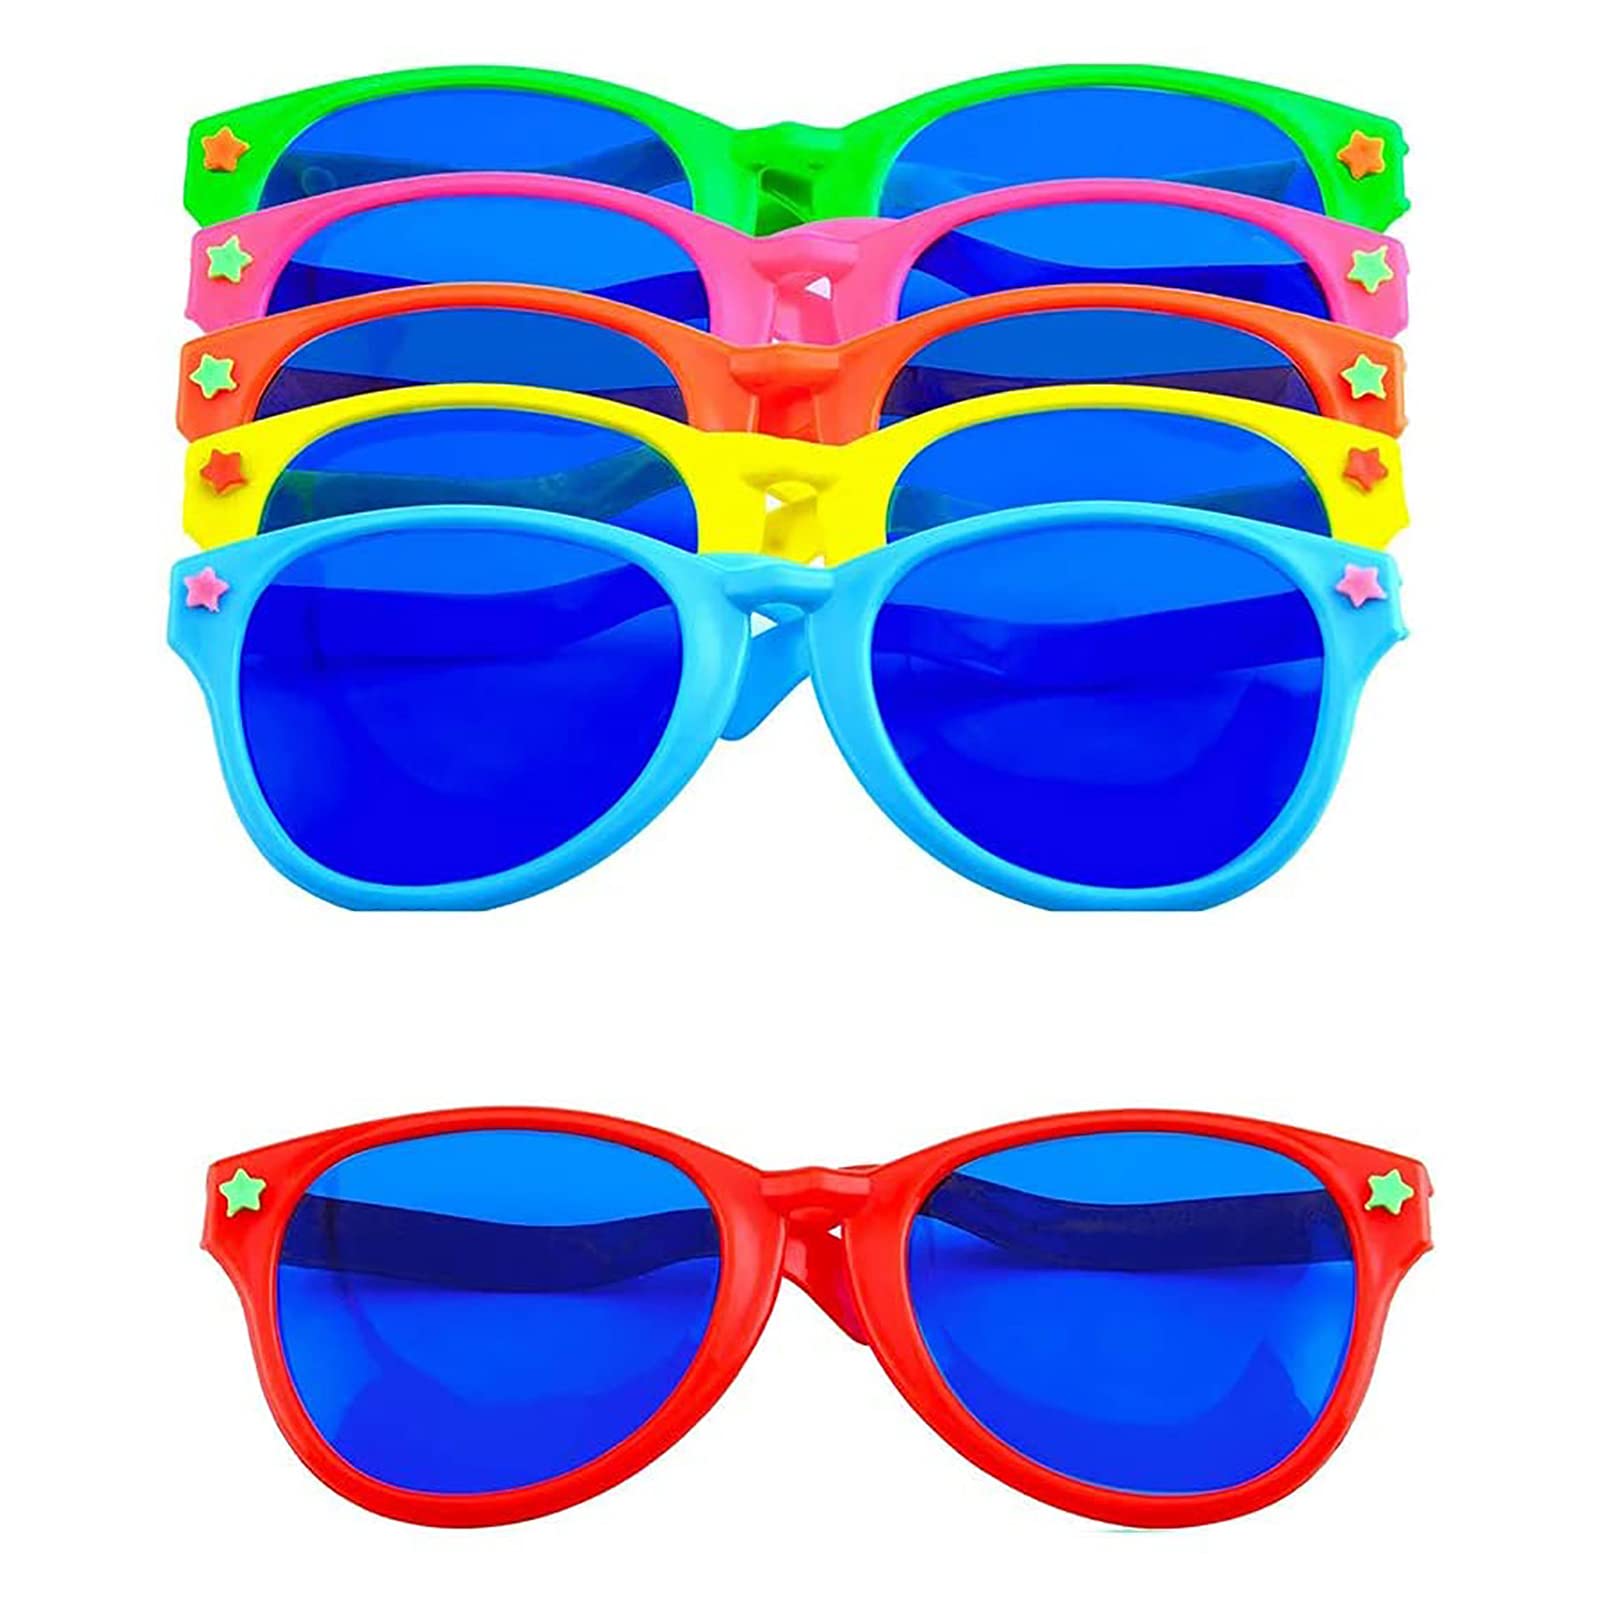 Soghot HUI JIN 6 Pcs Jumbo Plastic Sunglasses Funny Party Glasses Swim Party Favors for Festival Supplies Accessories